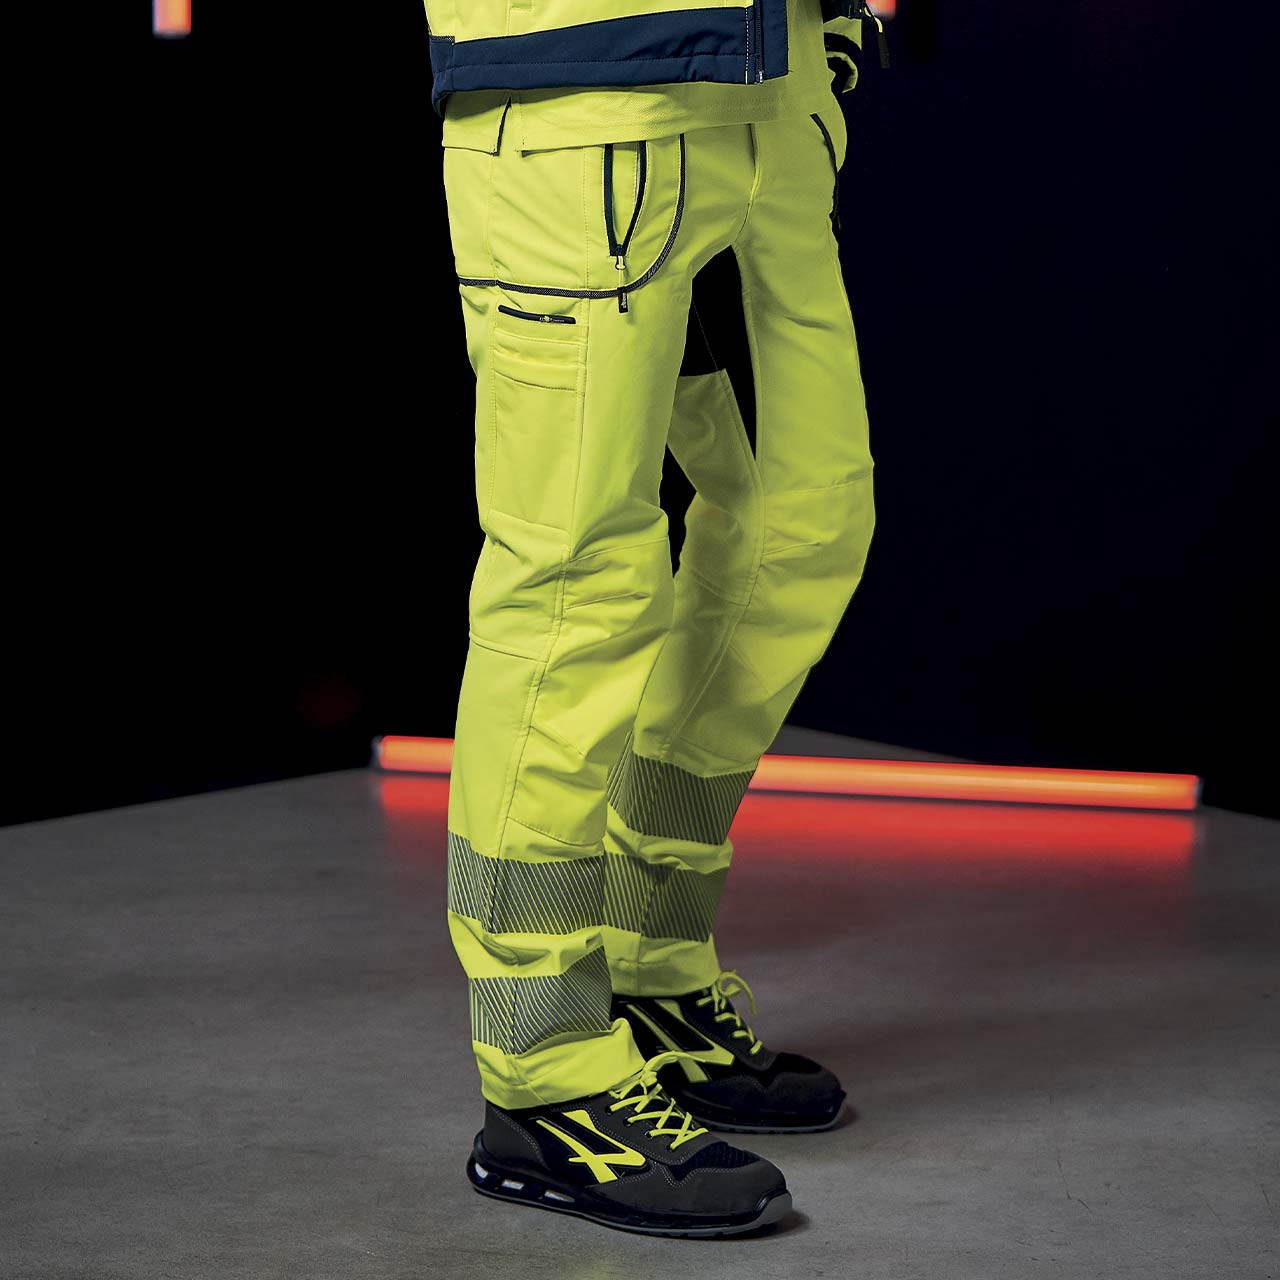 https://www.toolshopitalia.it/uploads/images/pantalone-da-lavoro-upower-modello-ren-colore-yellow-fluo-06.jpg